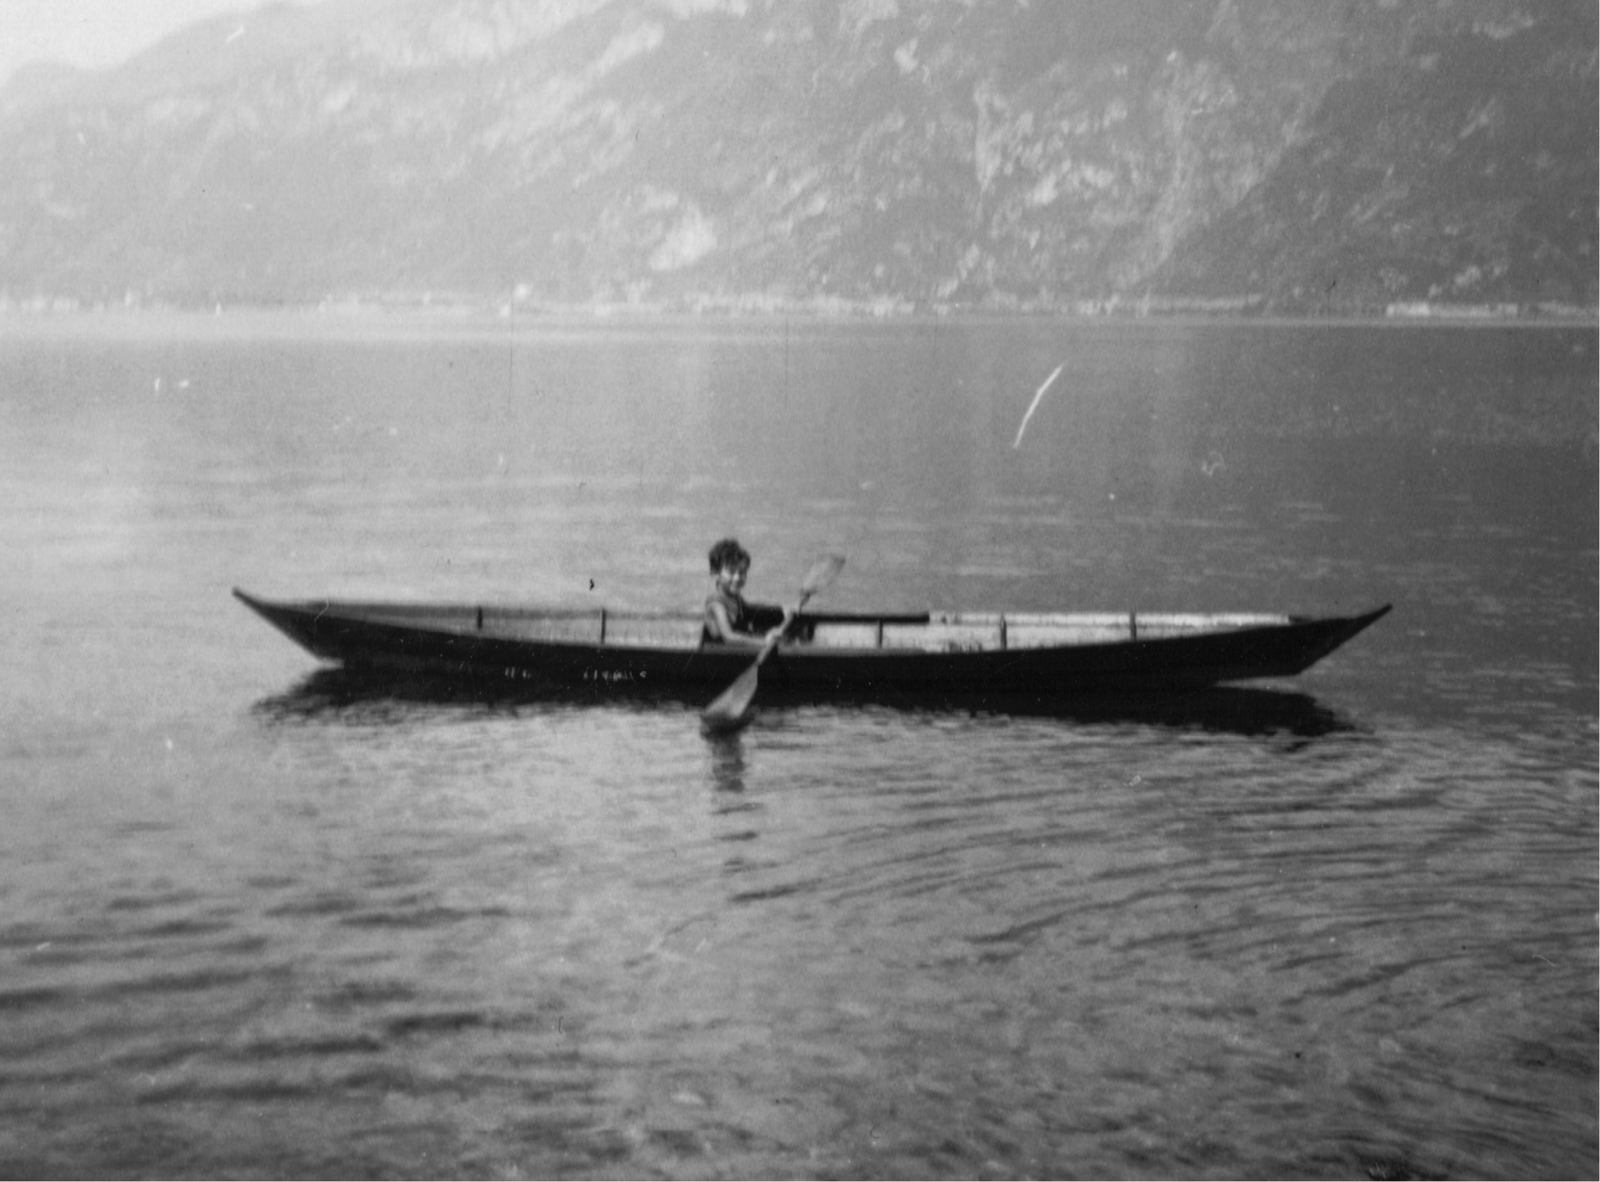 3 - Nestore Guido on a canoe 1950s